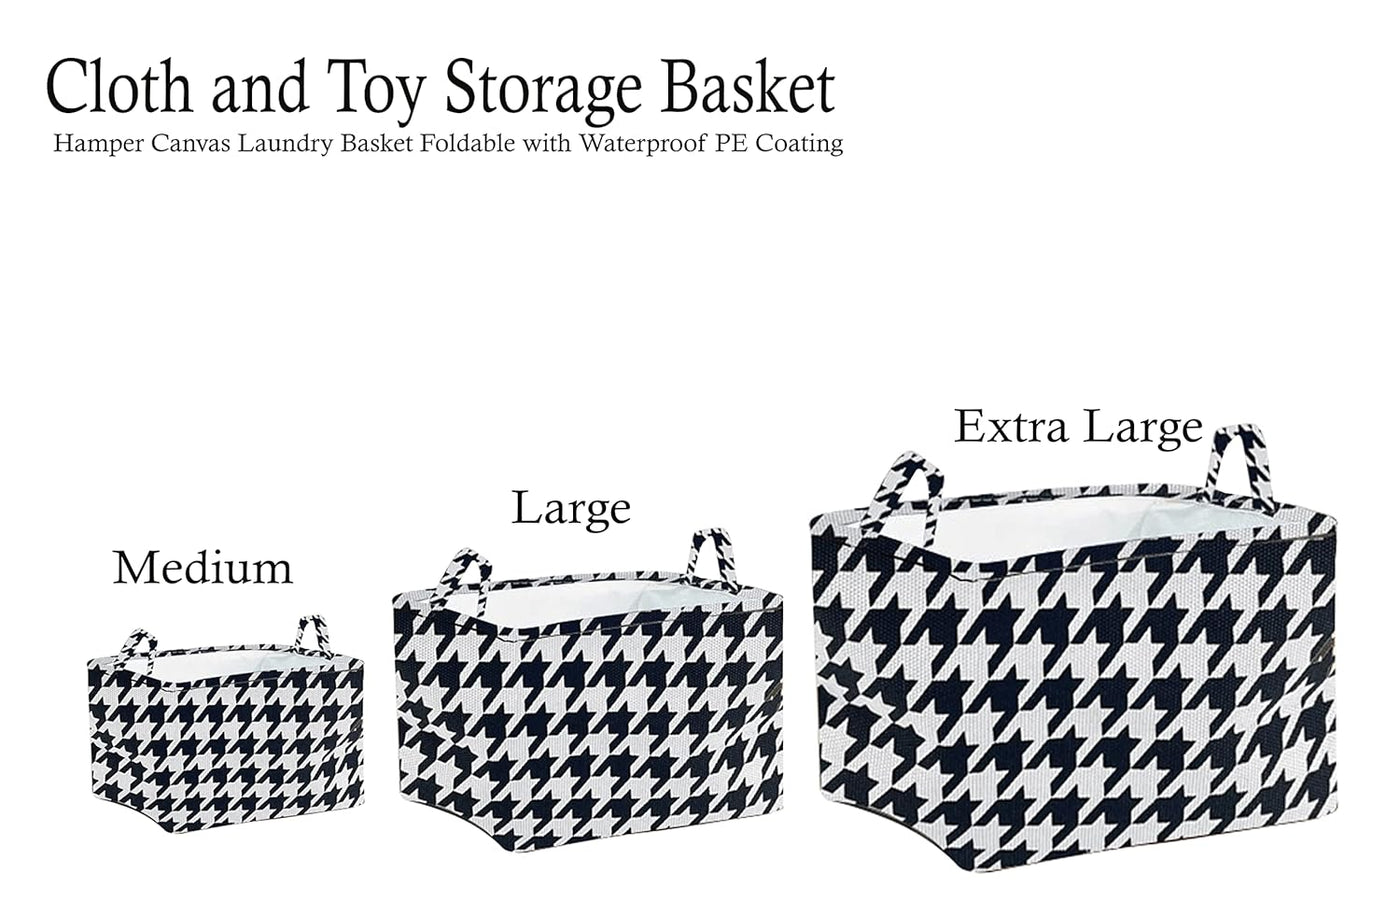 22 Litre Storage Baskets, Rectangle Collapsible Storage Bins - (38x26x23cm, Large)